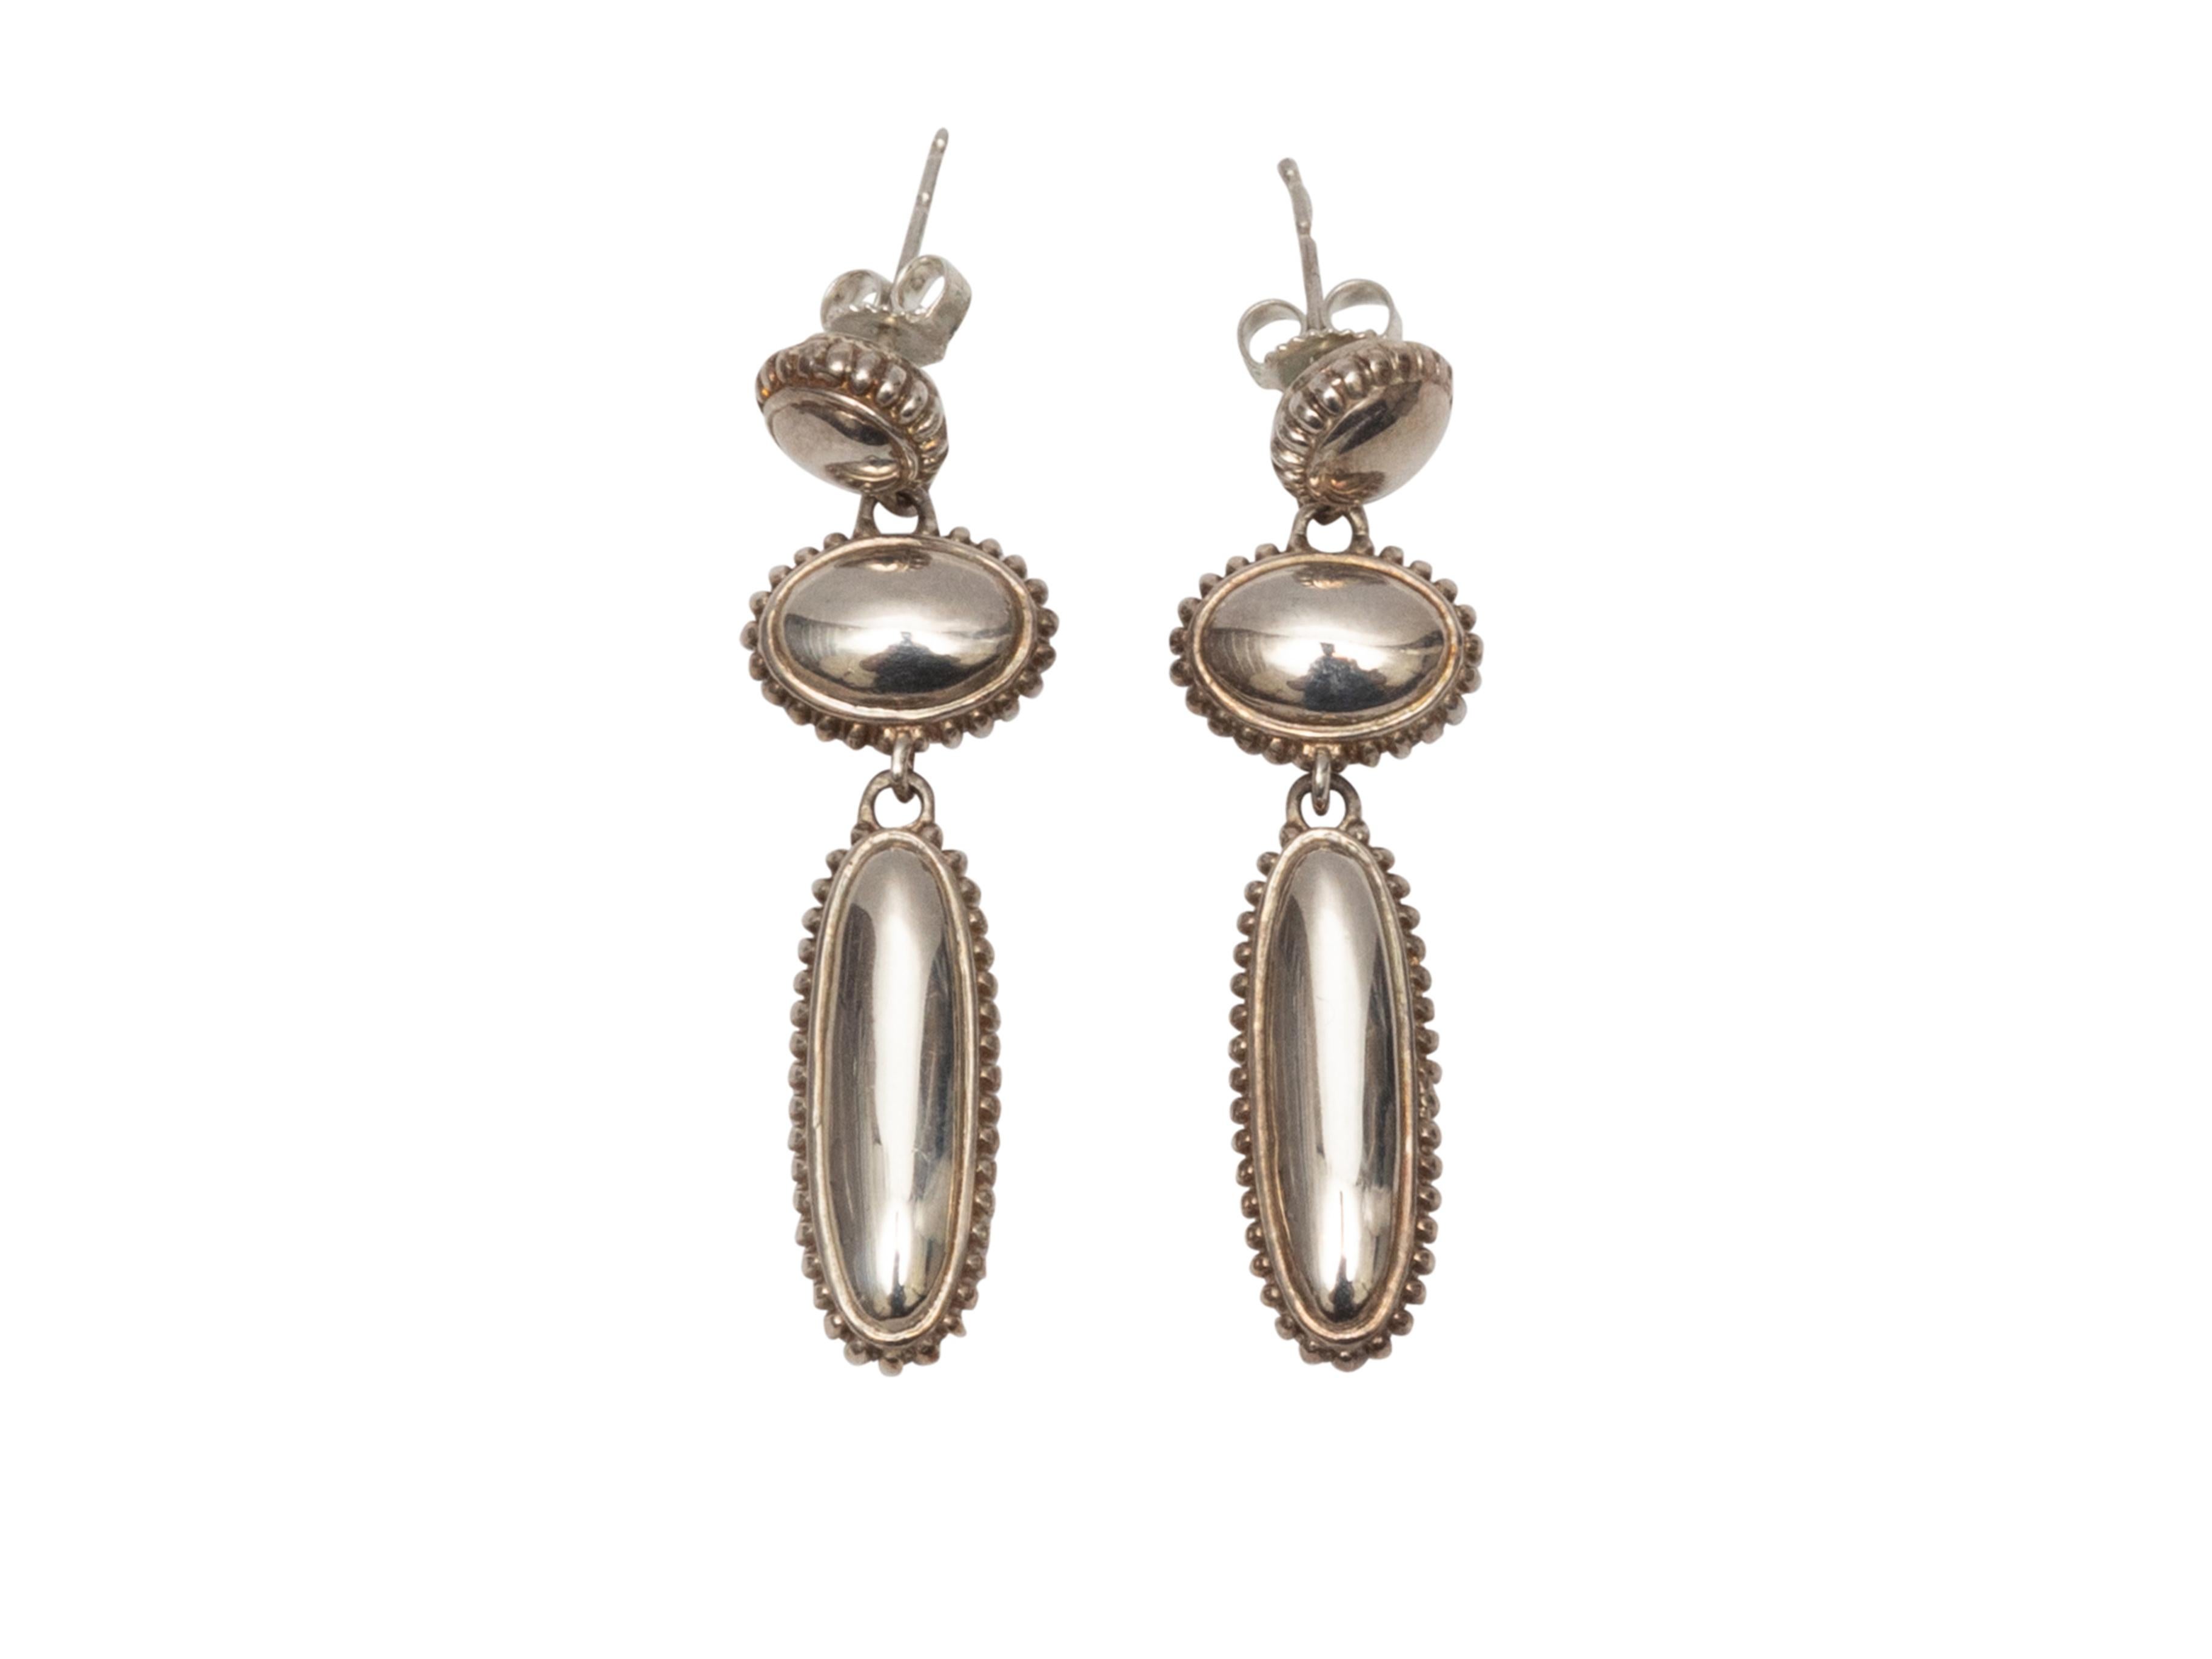 Product Details: Silver segmented pierced drop earrings by Shinola. 0.3